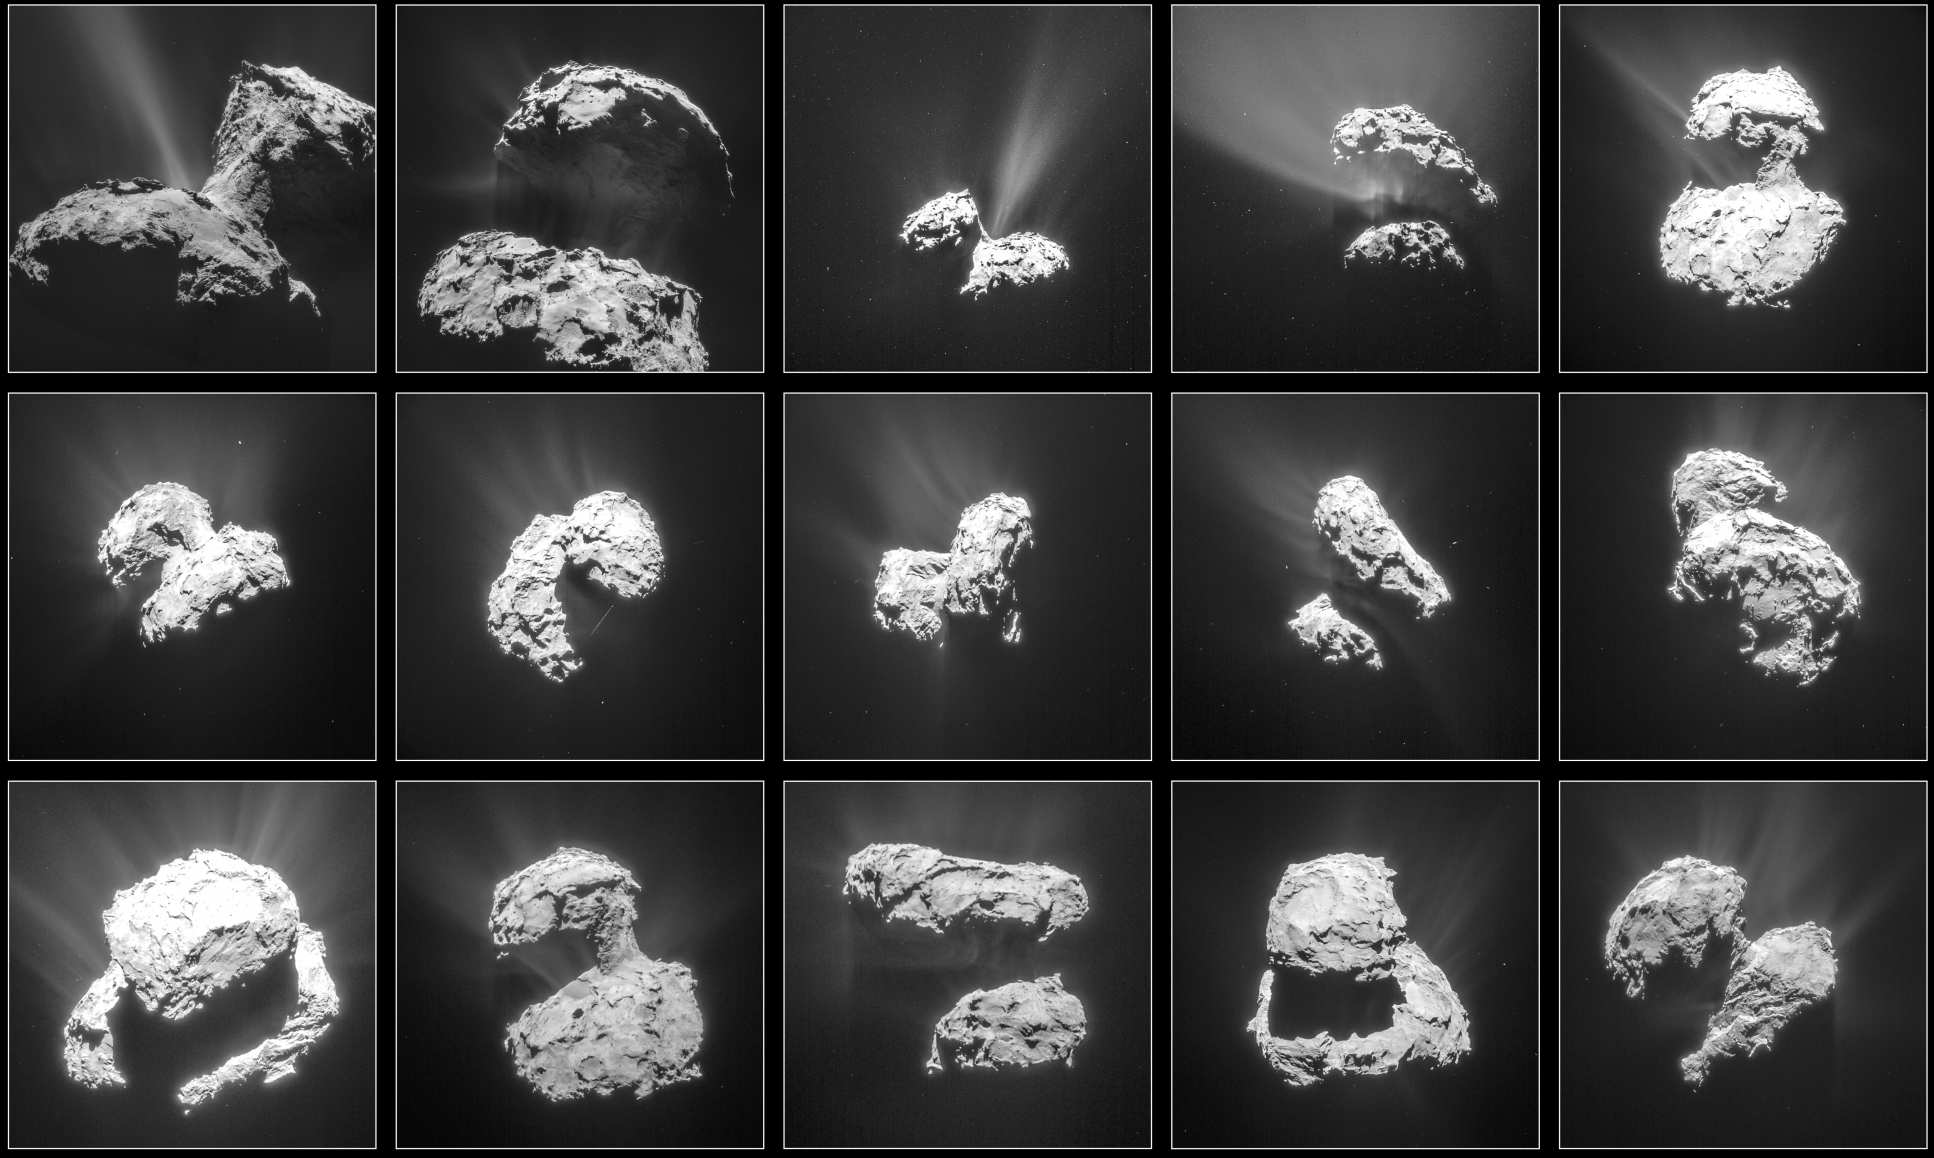 Views of the comet form Rosetta. Credit: ESA